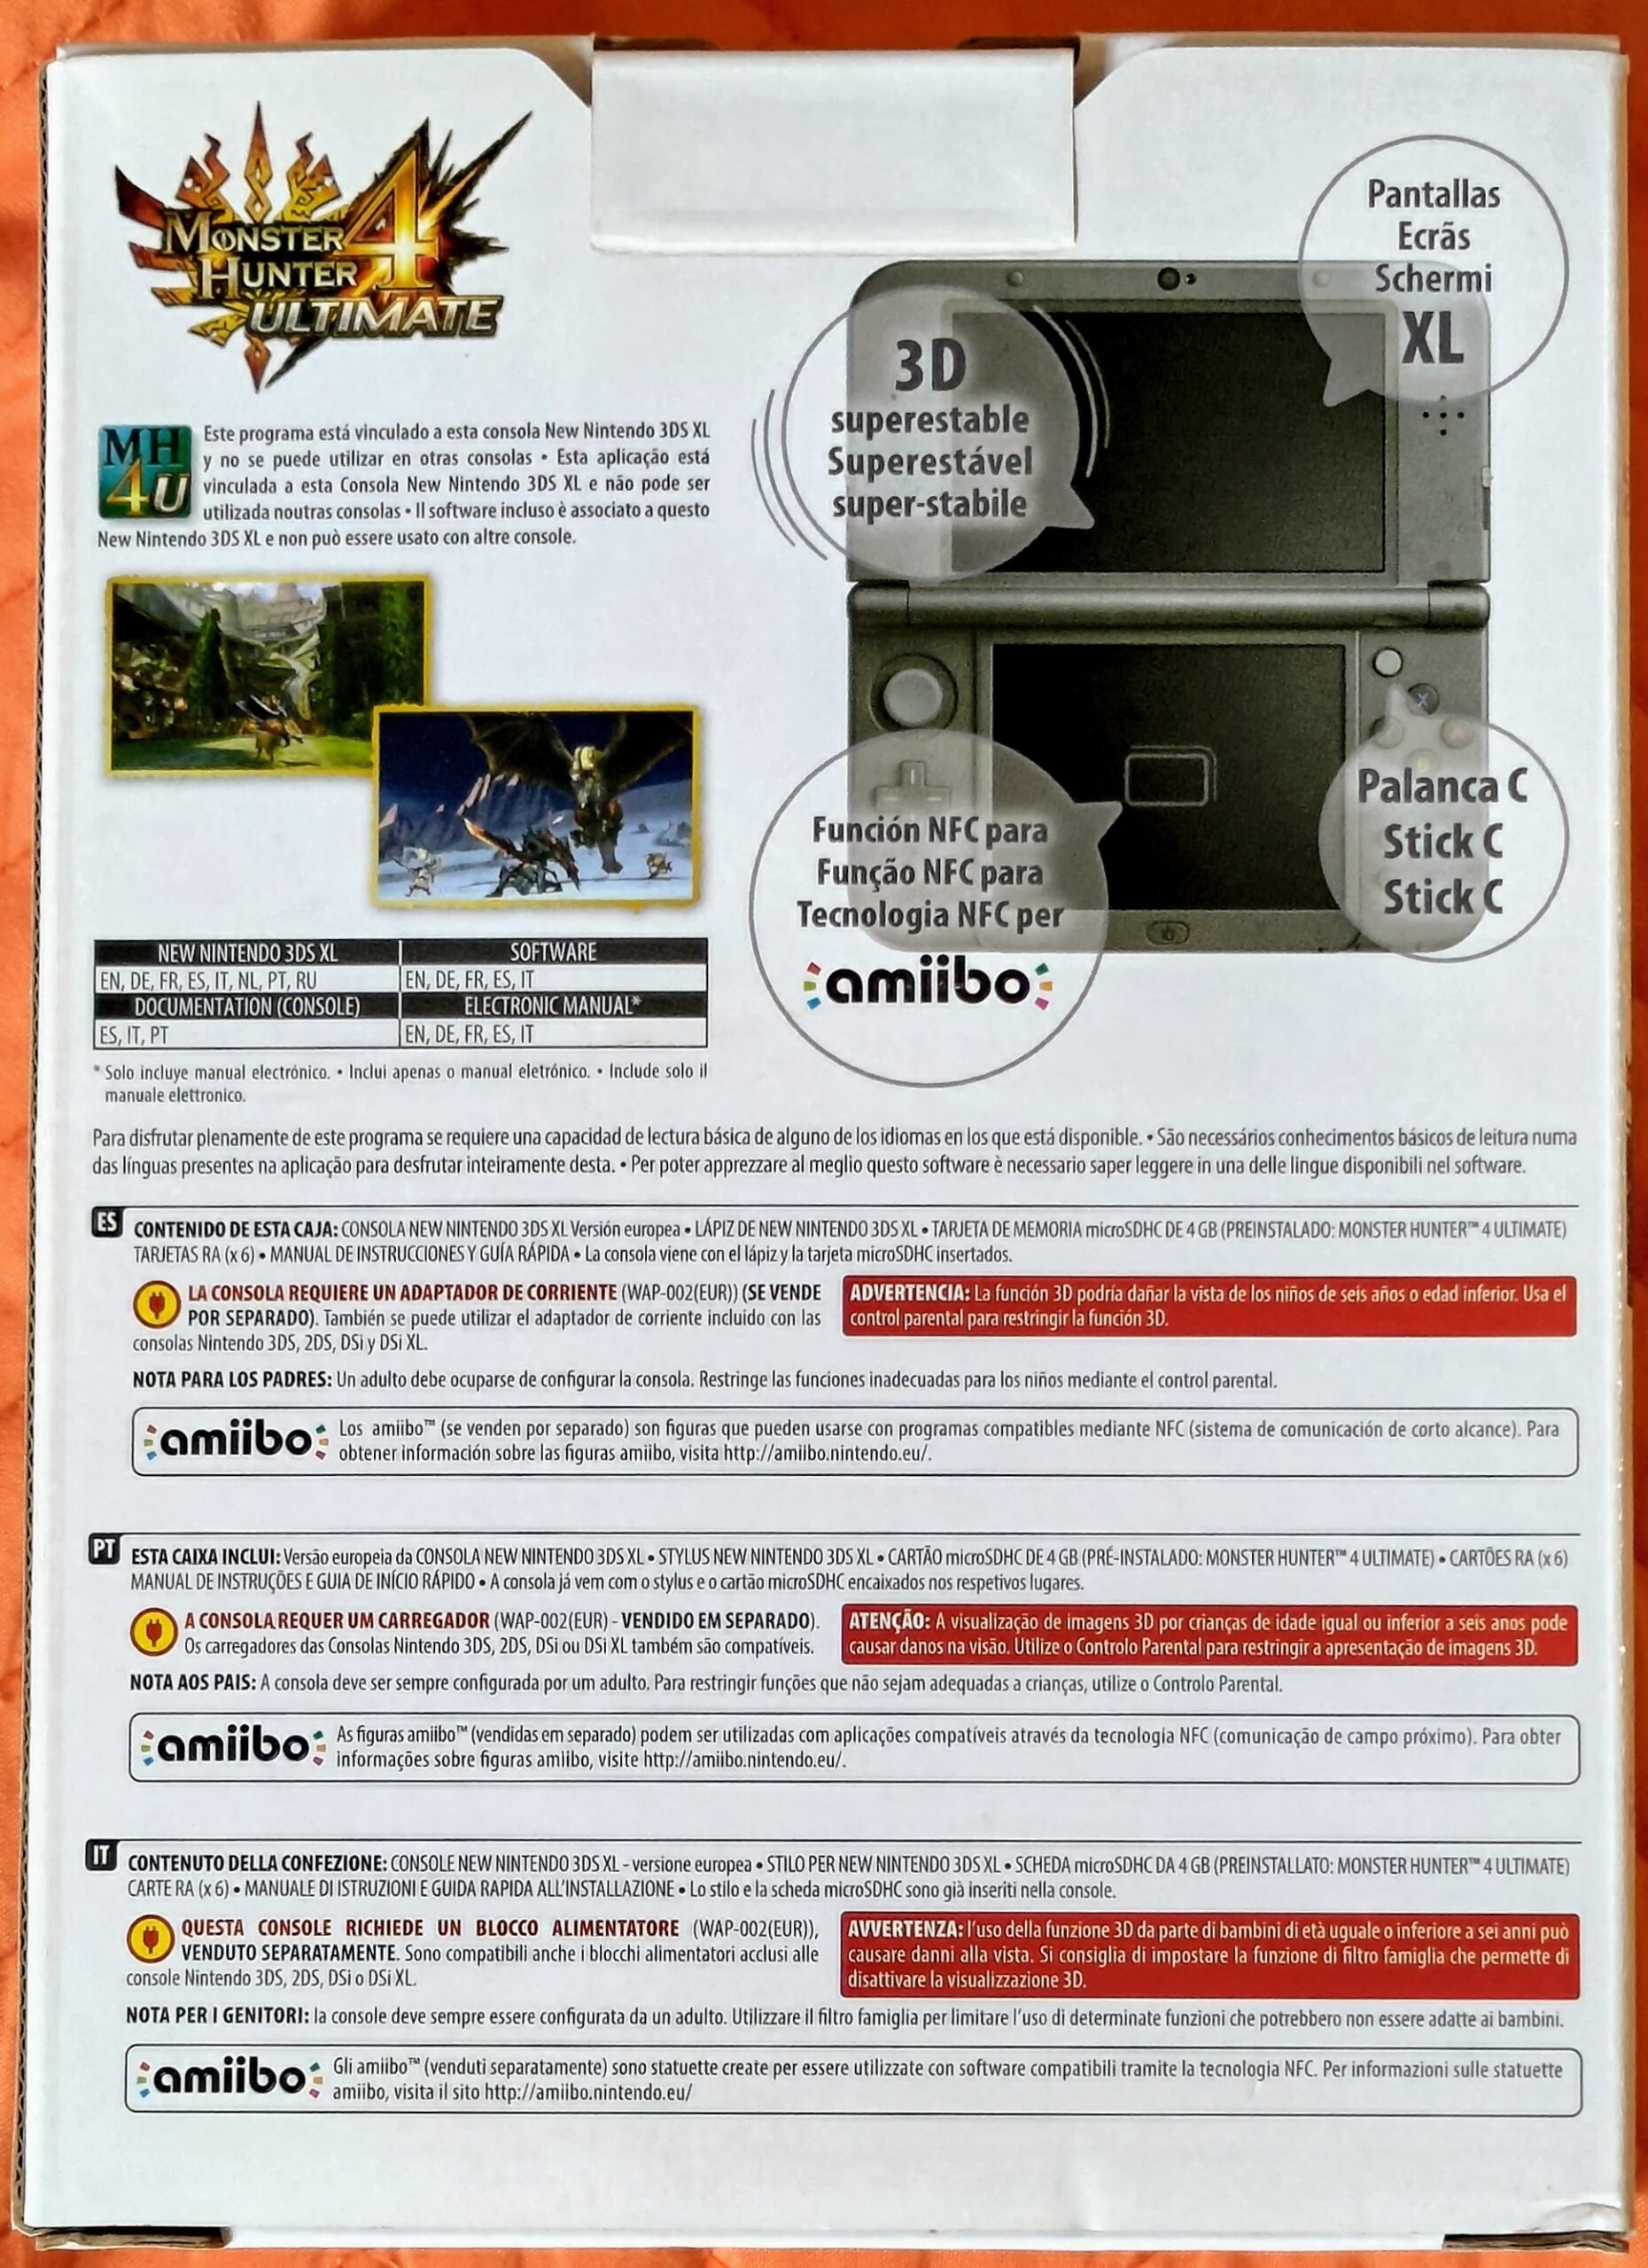 New Nintendo 3DS XL "Monster Hunter 4 Ultimate Edition", vista posteriormente